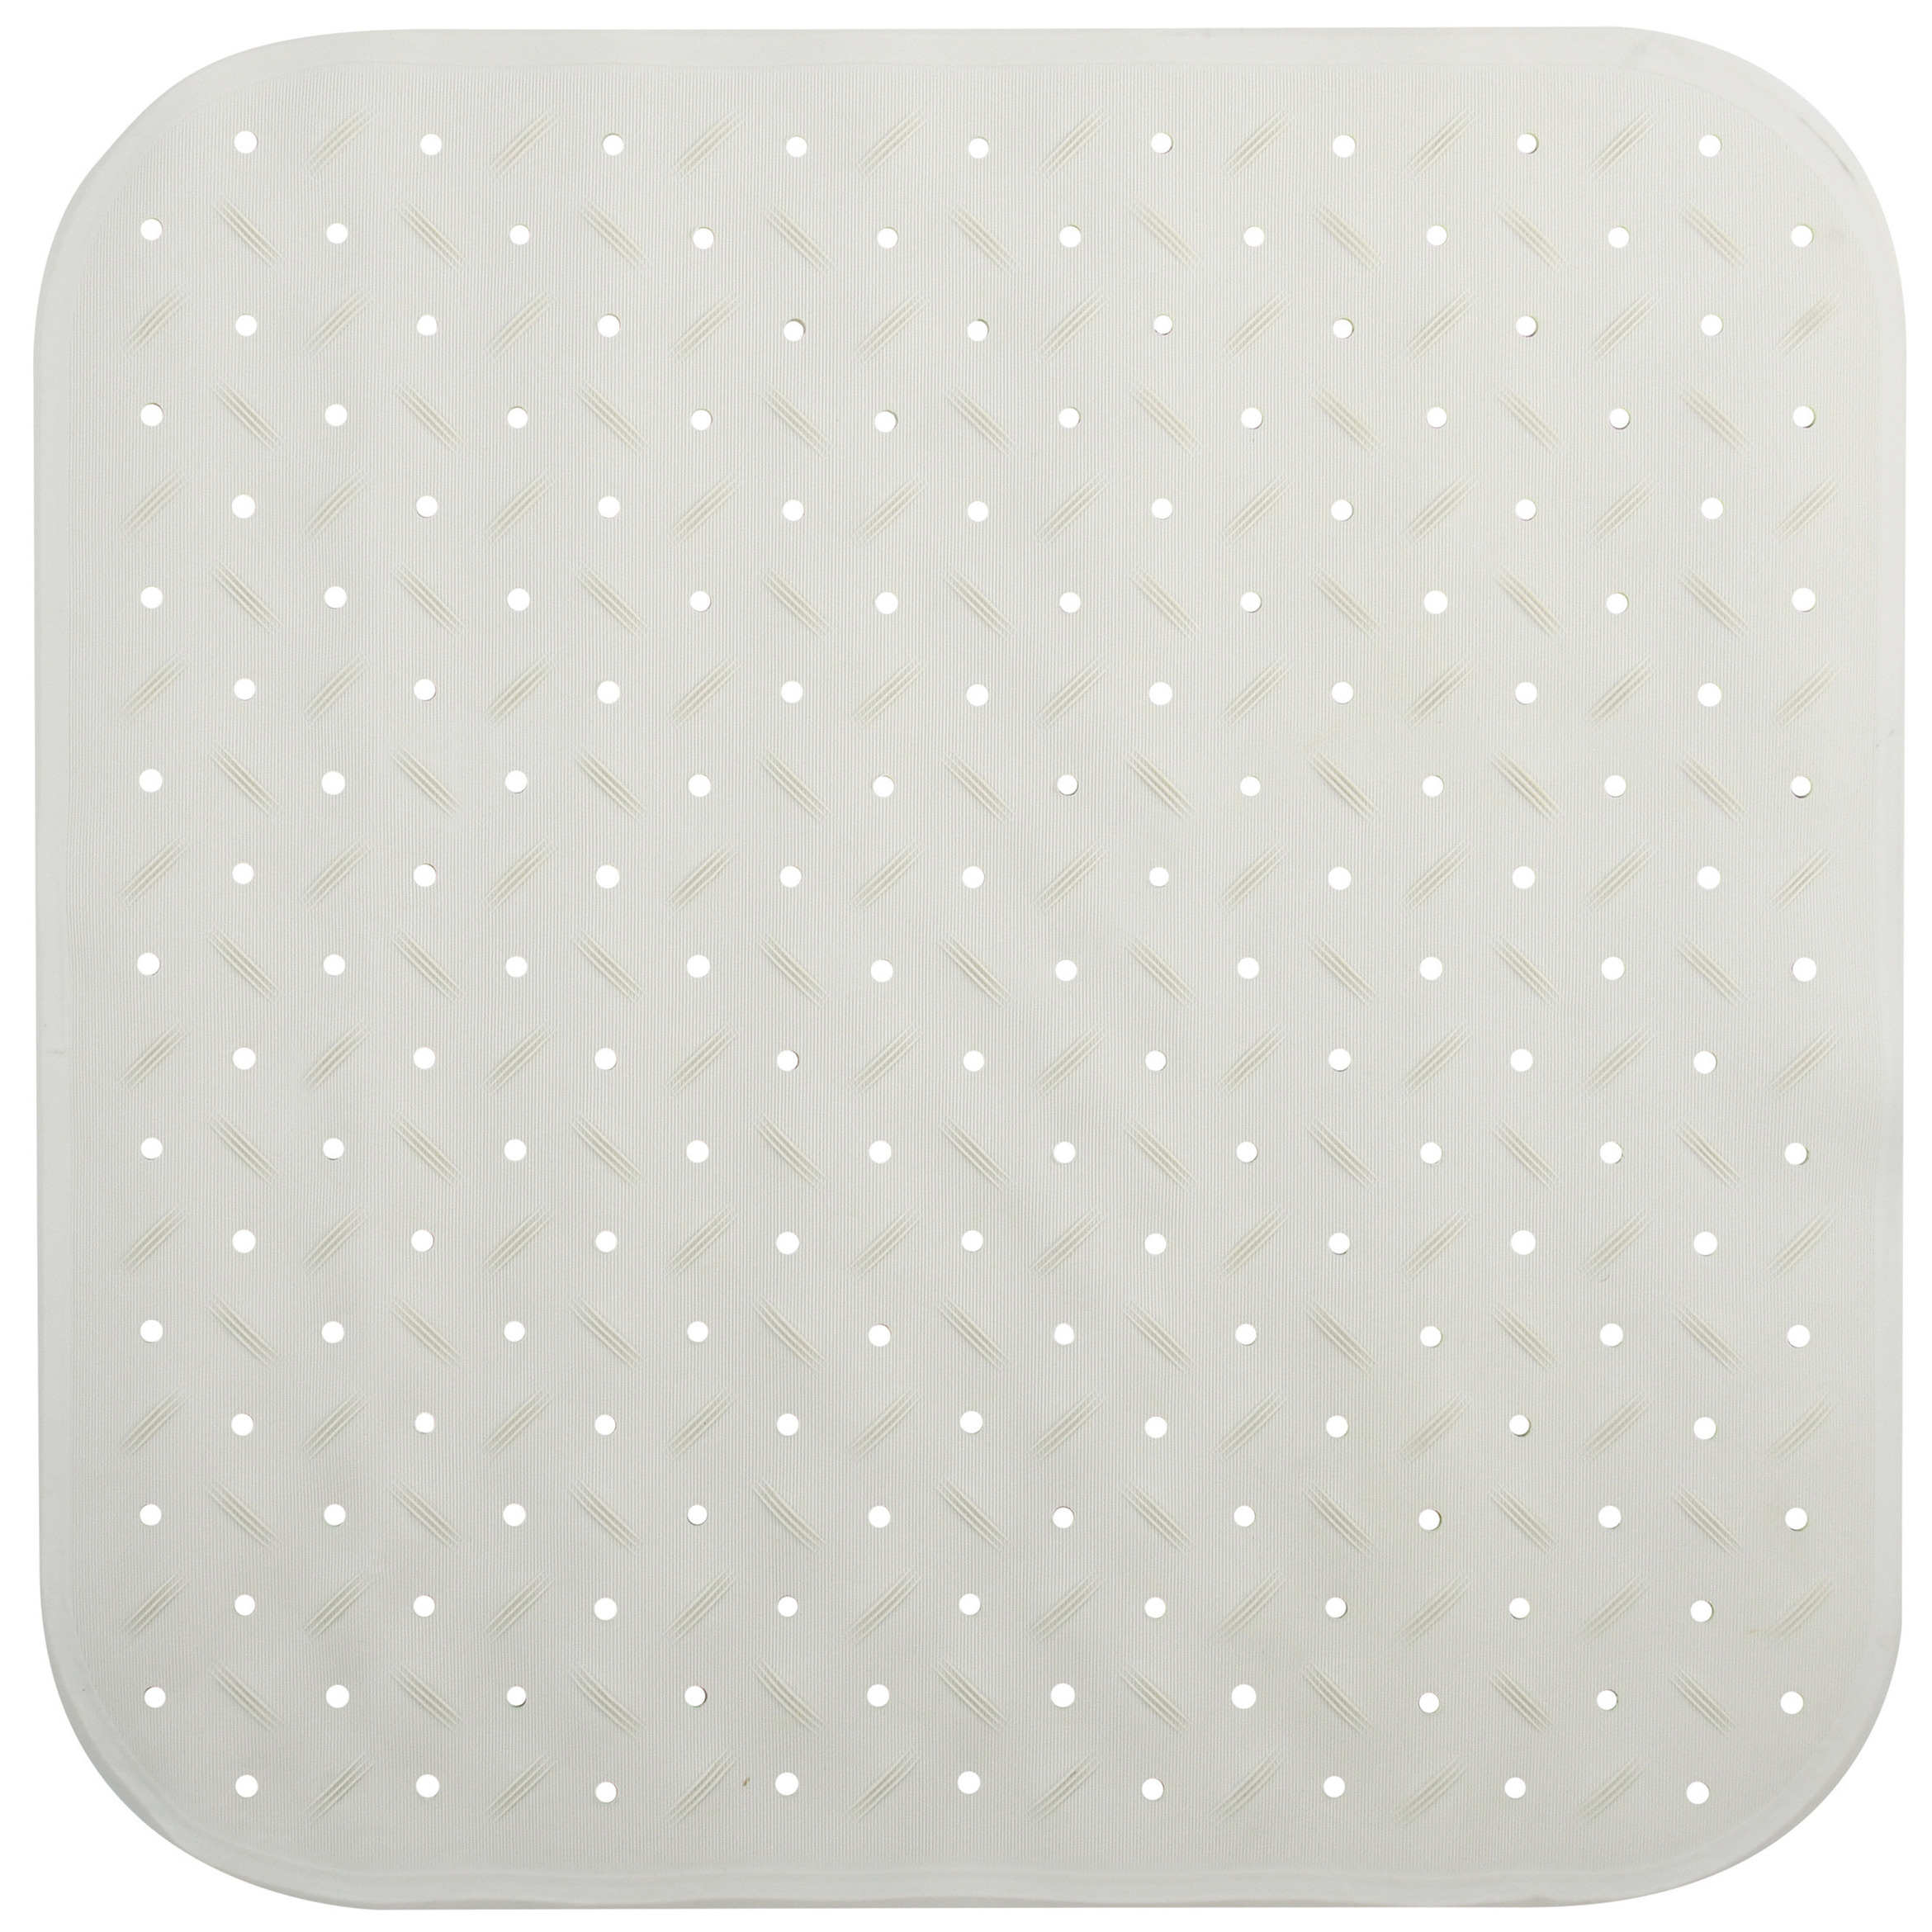 Douche-bad anti-slip mat badkamer rubber wit 54 x 54 cm vierkant